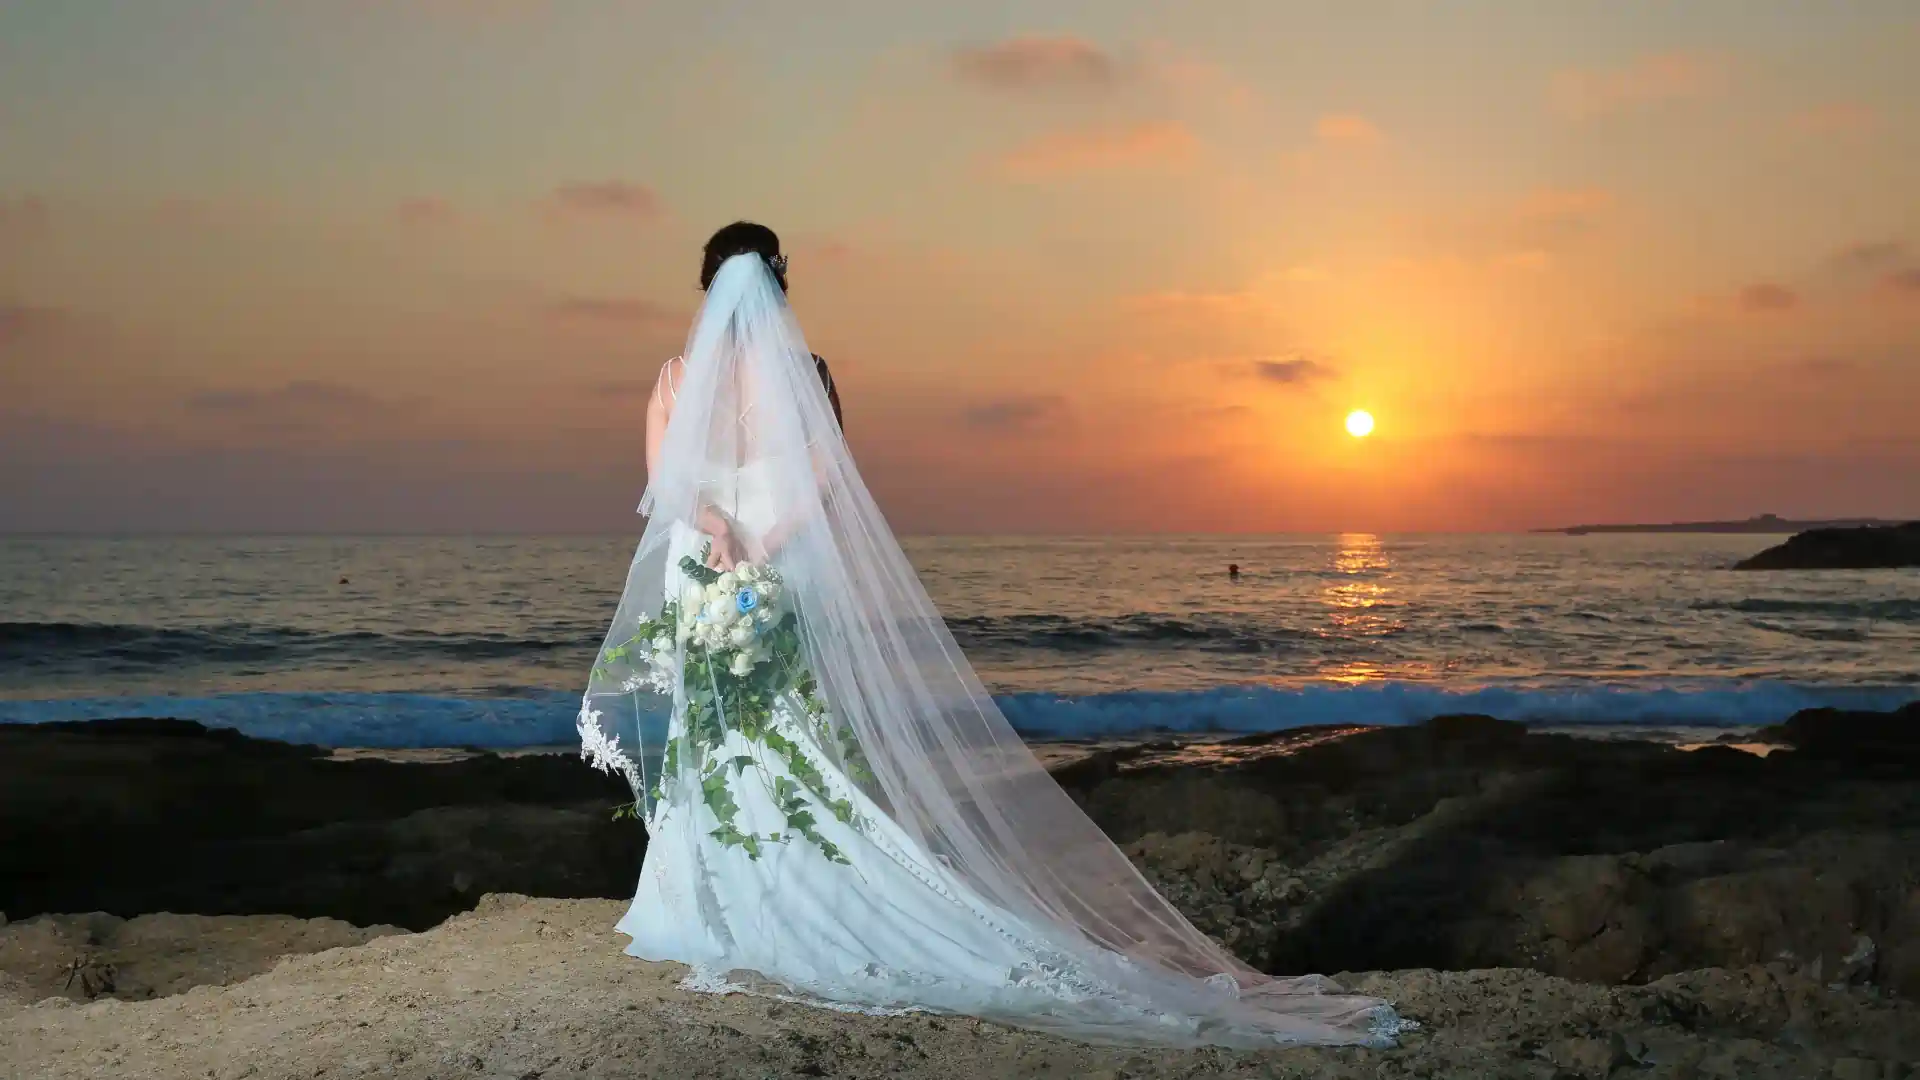 Leonardo Cypria Bay - Let Us Bring Your Dream Wedding to Life